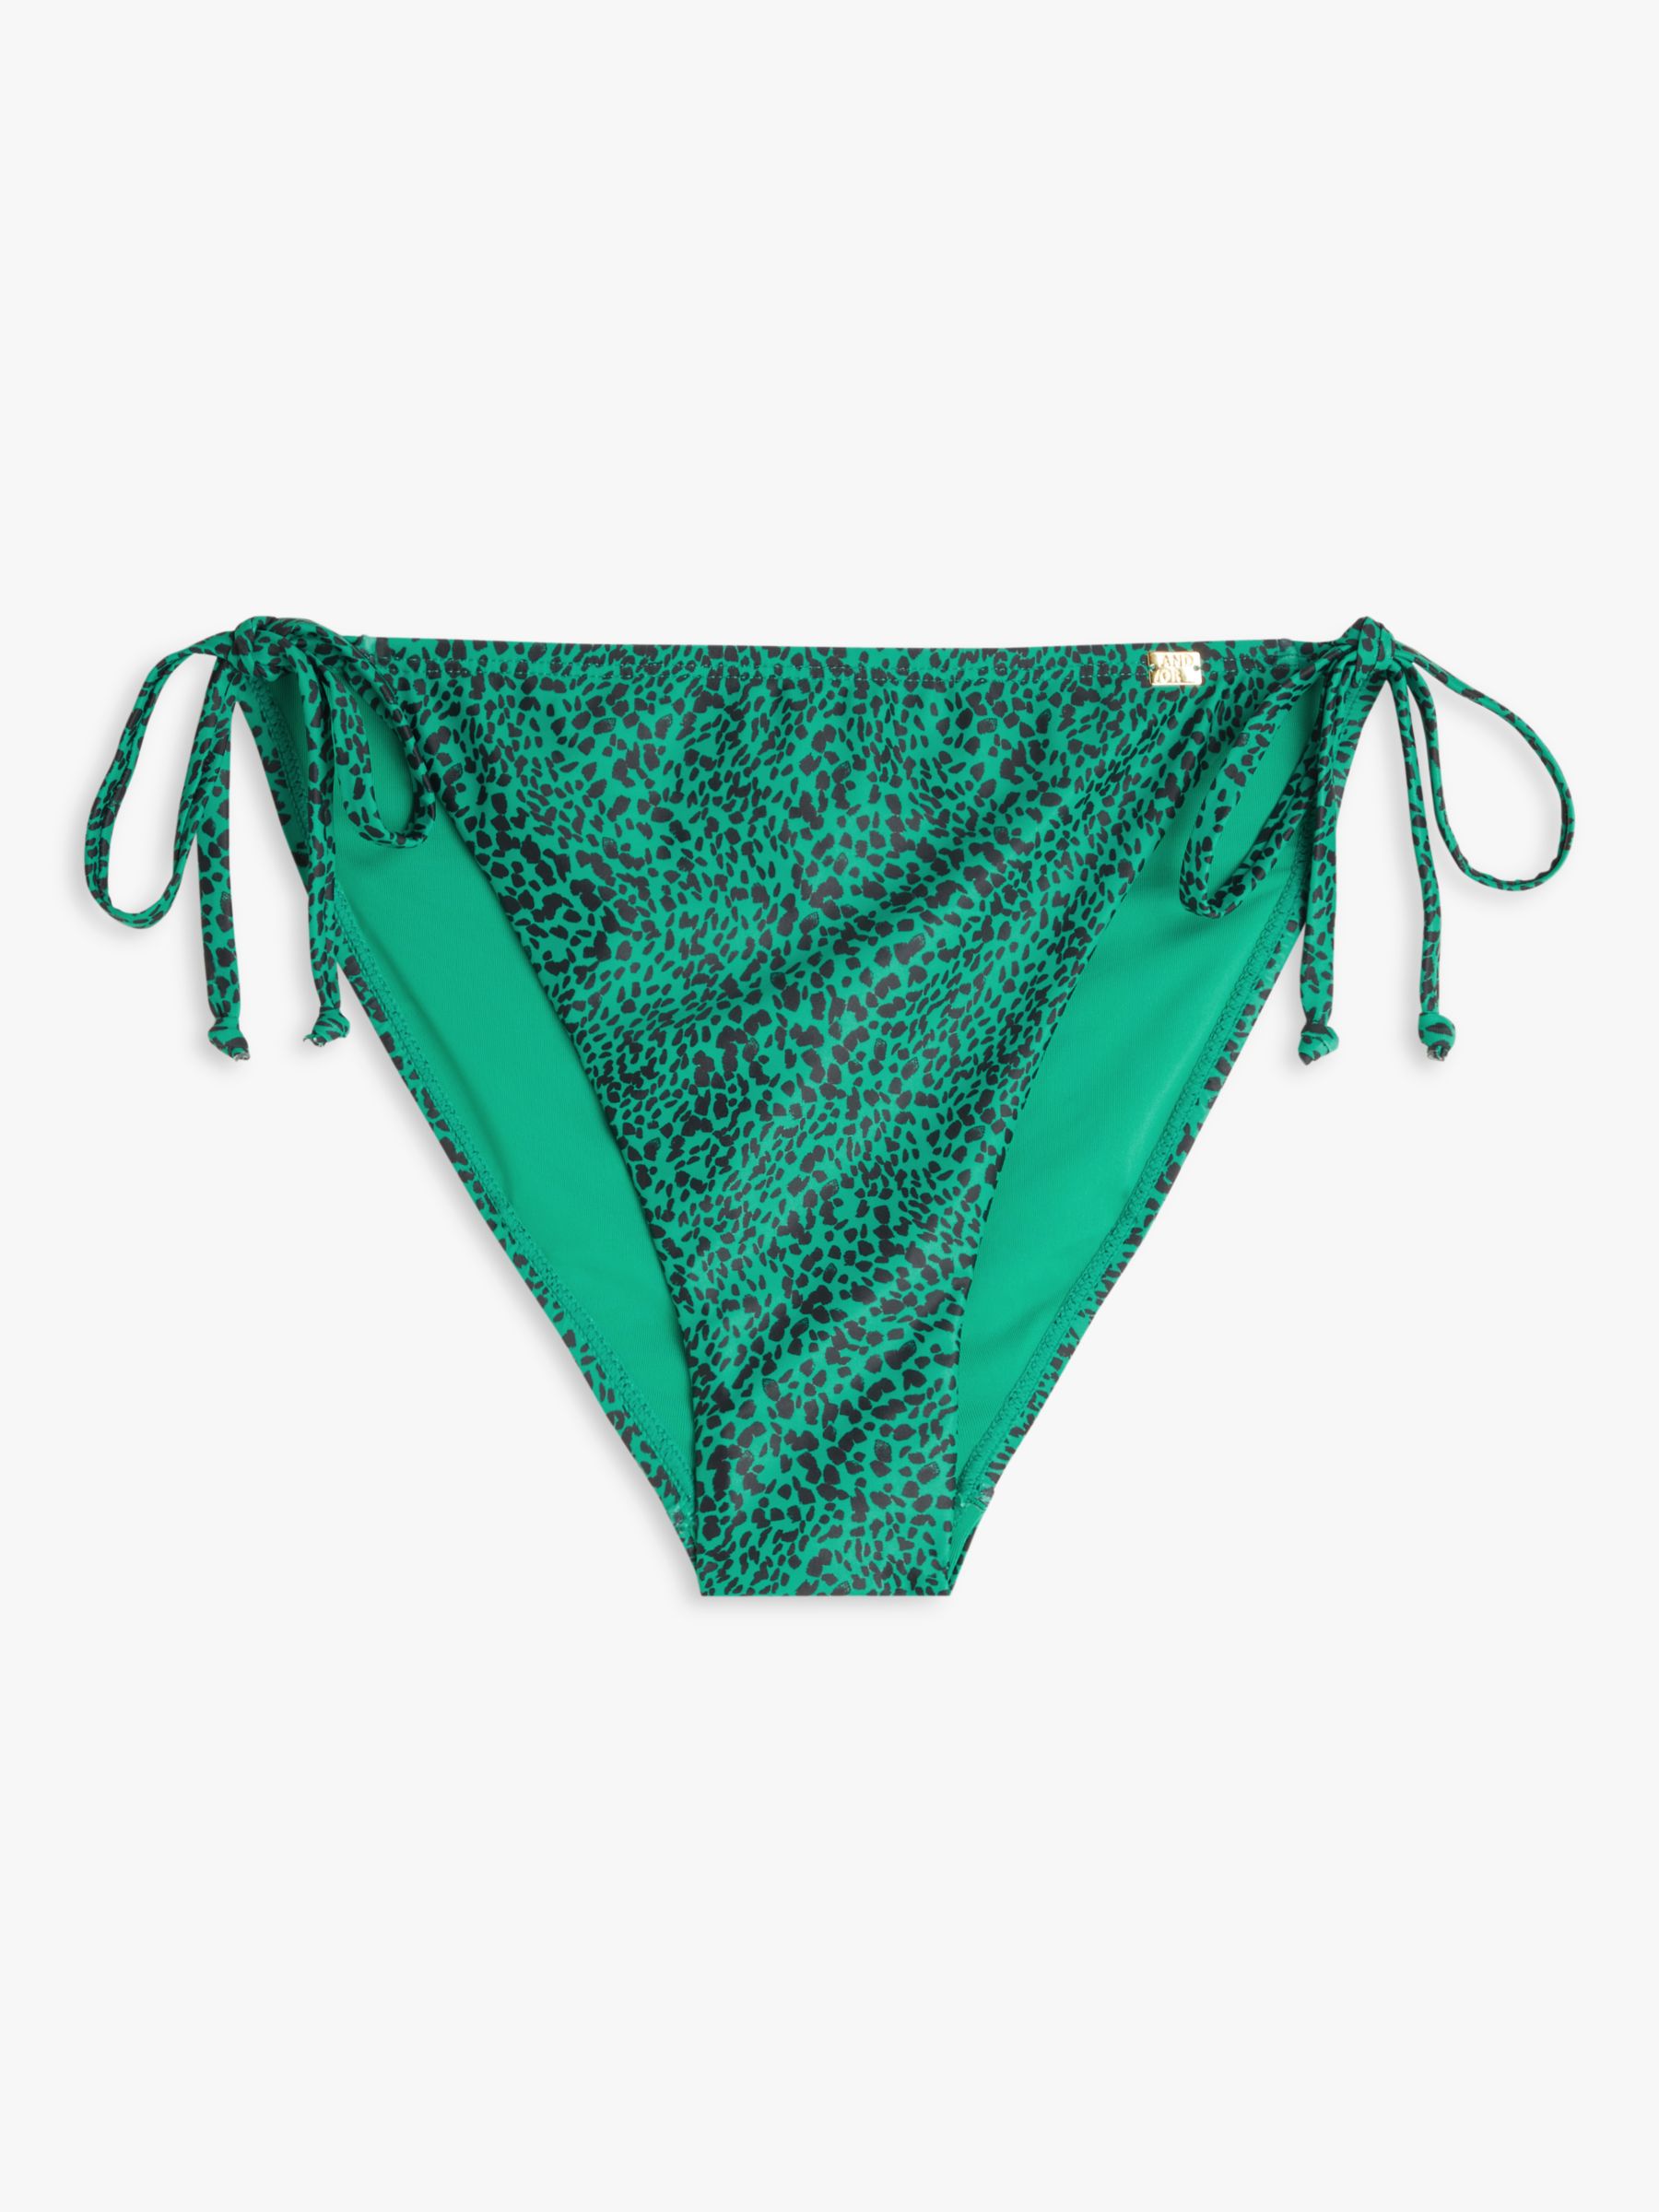 AND/OR Jungle Smooth Bikini Bottoms, Green, 18